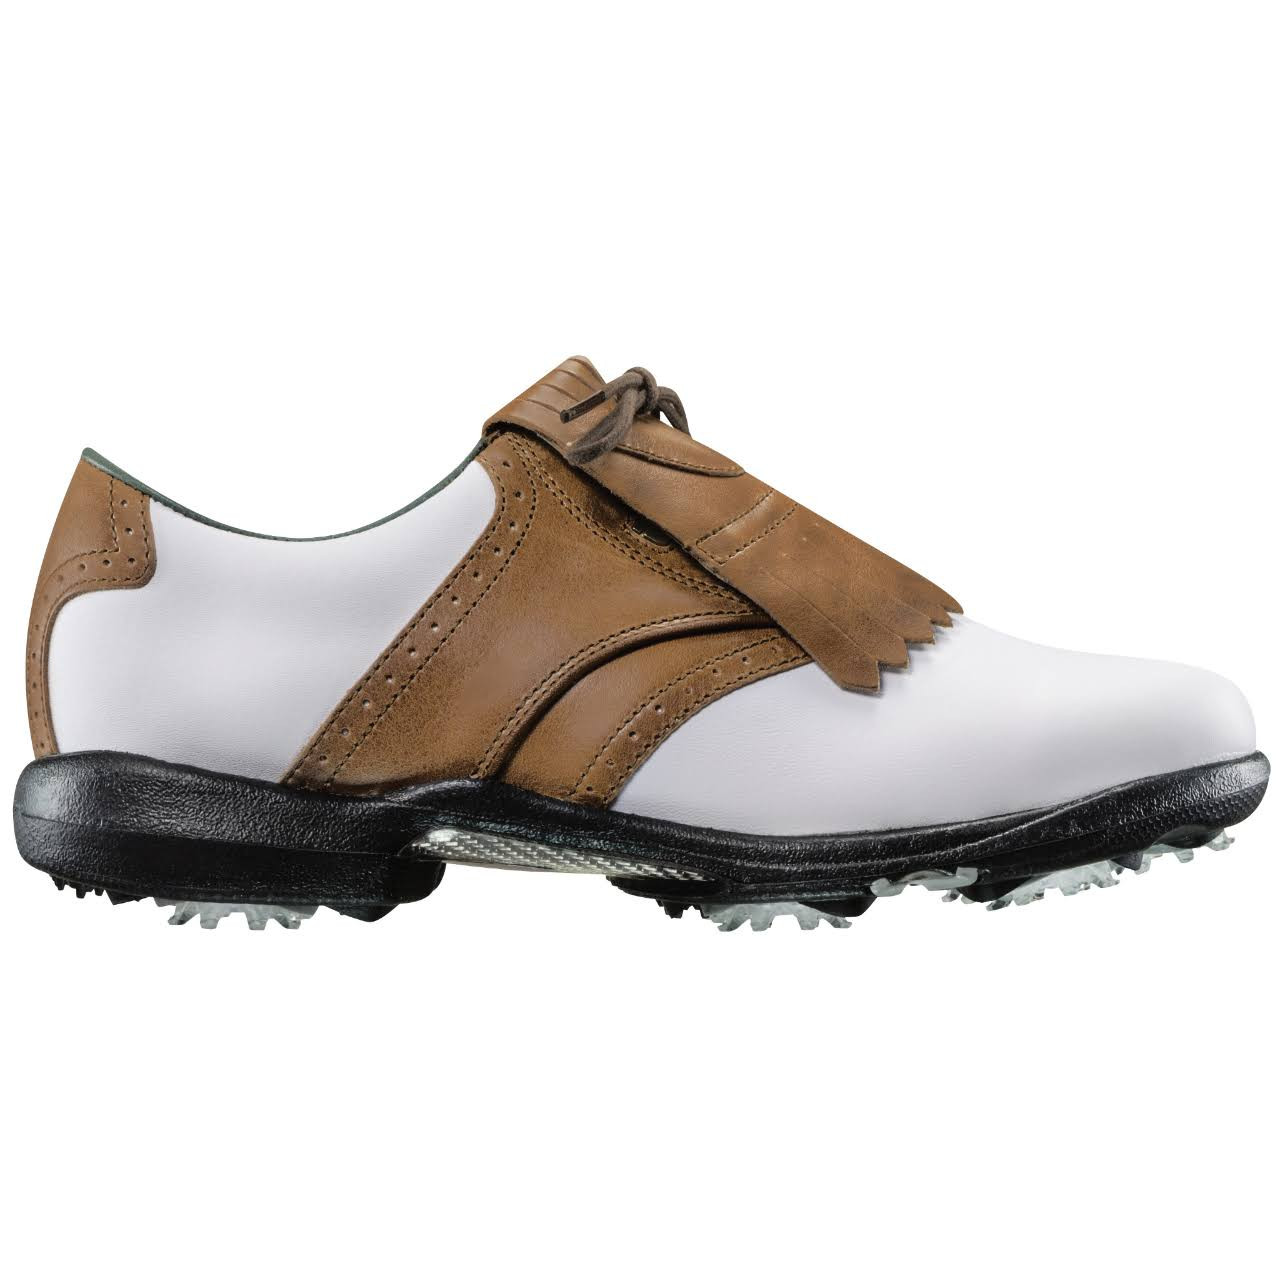 FootJoy Women's DryJoys Golf Shoes, White - Ahmadkrieg